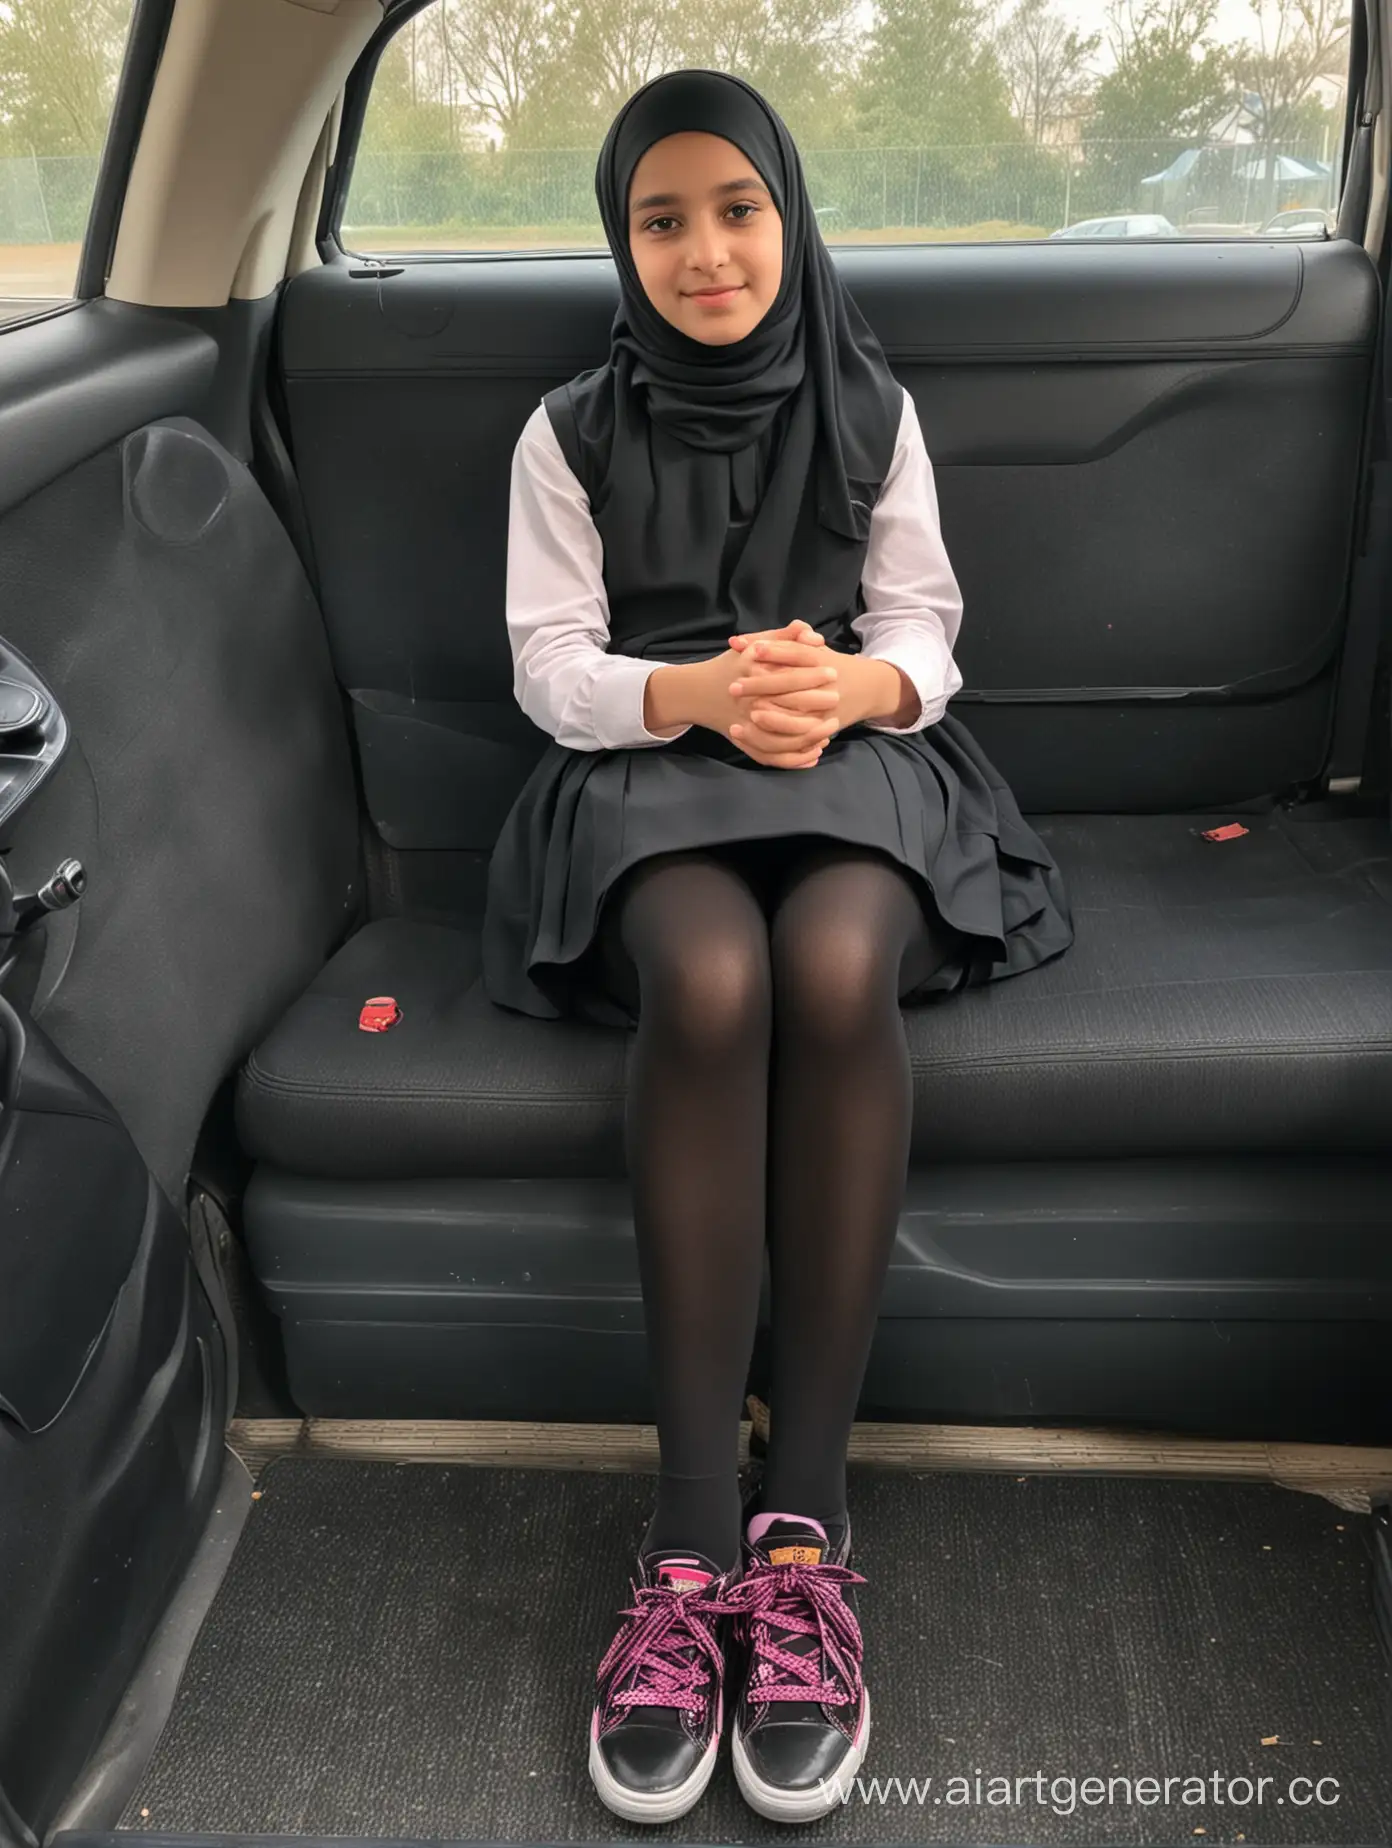 Schoolgirl-Wearing-Hijab-and-Uniform-Crossing-Legs-in-Car